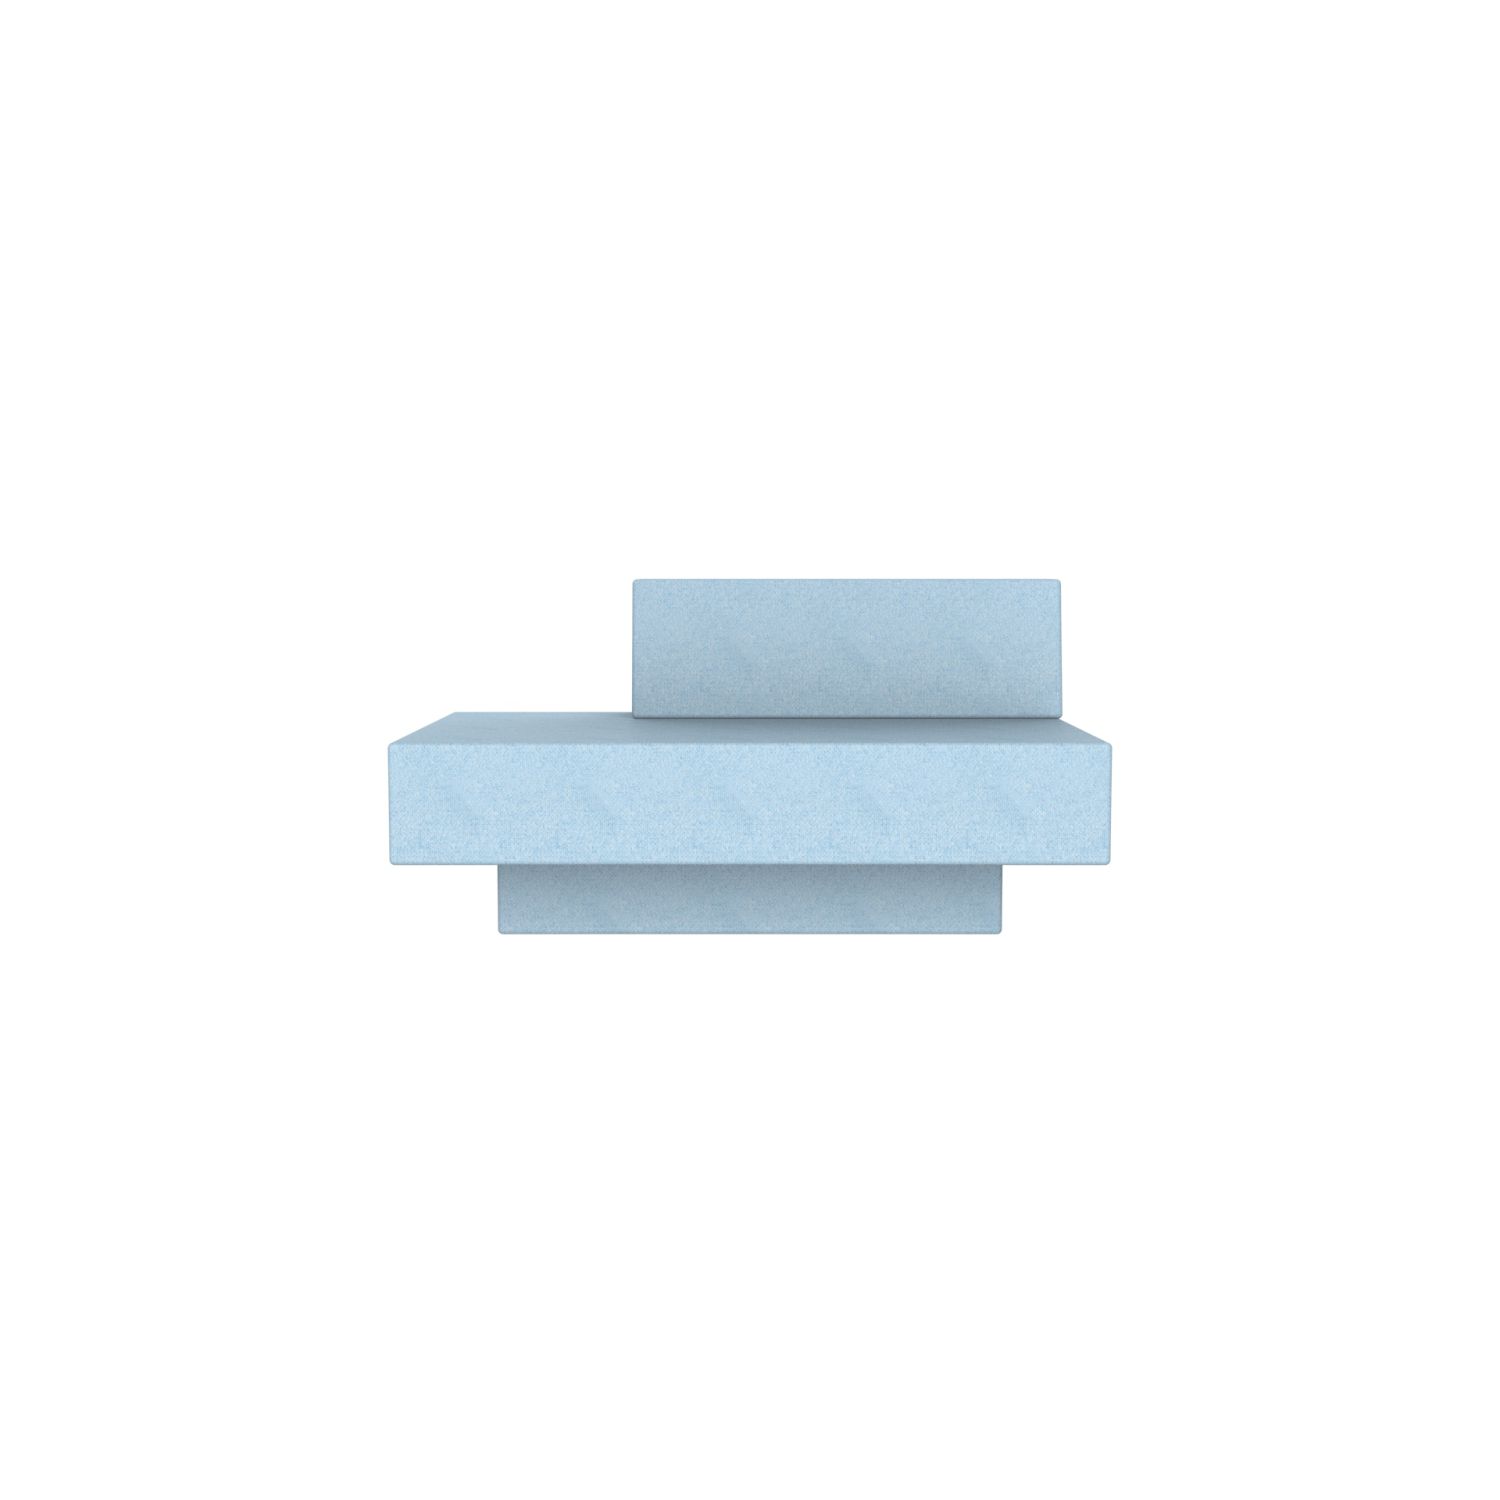 lensvelt atelier van lieshout glyder sofa with sliding backrest 85 x 135 cm moss pastel blue 40 price level 2